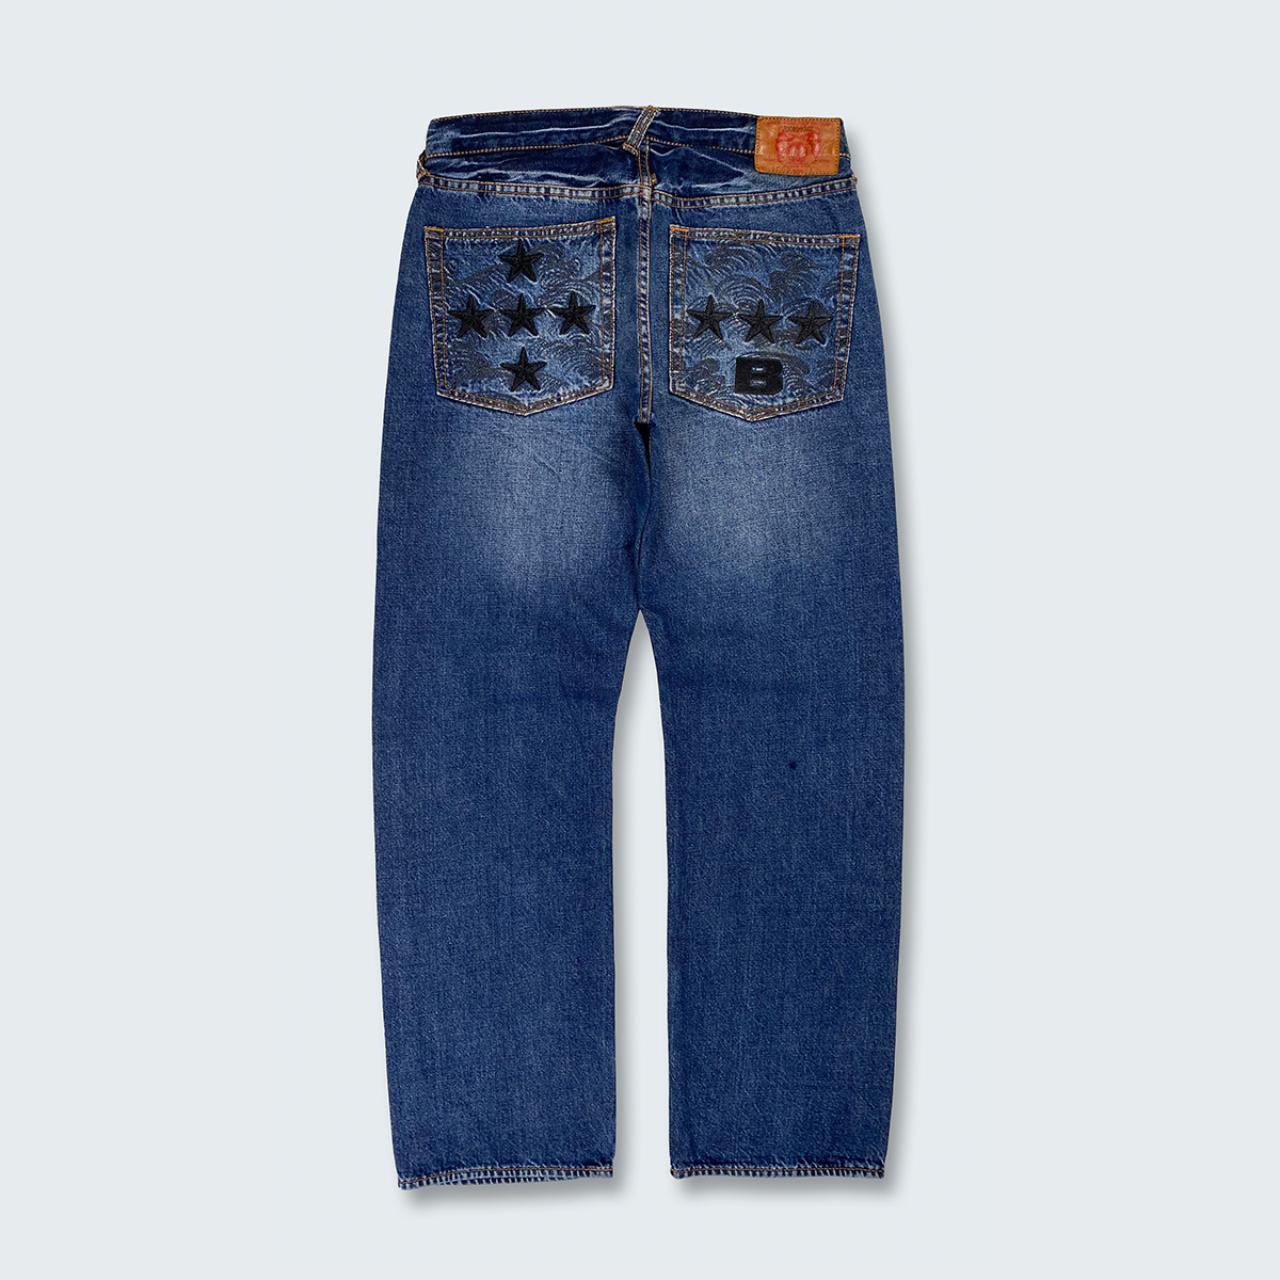 Authentic Vintage RMC Jeans (33")